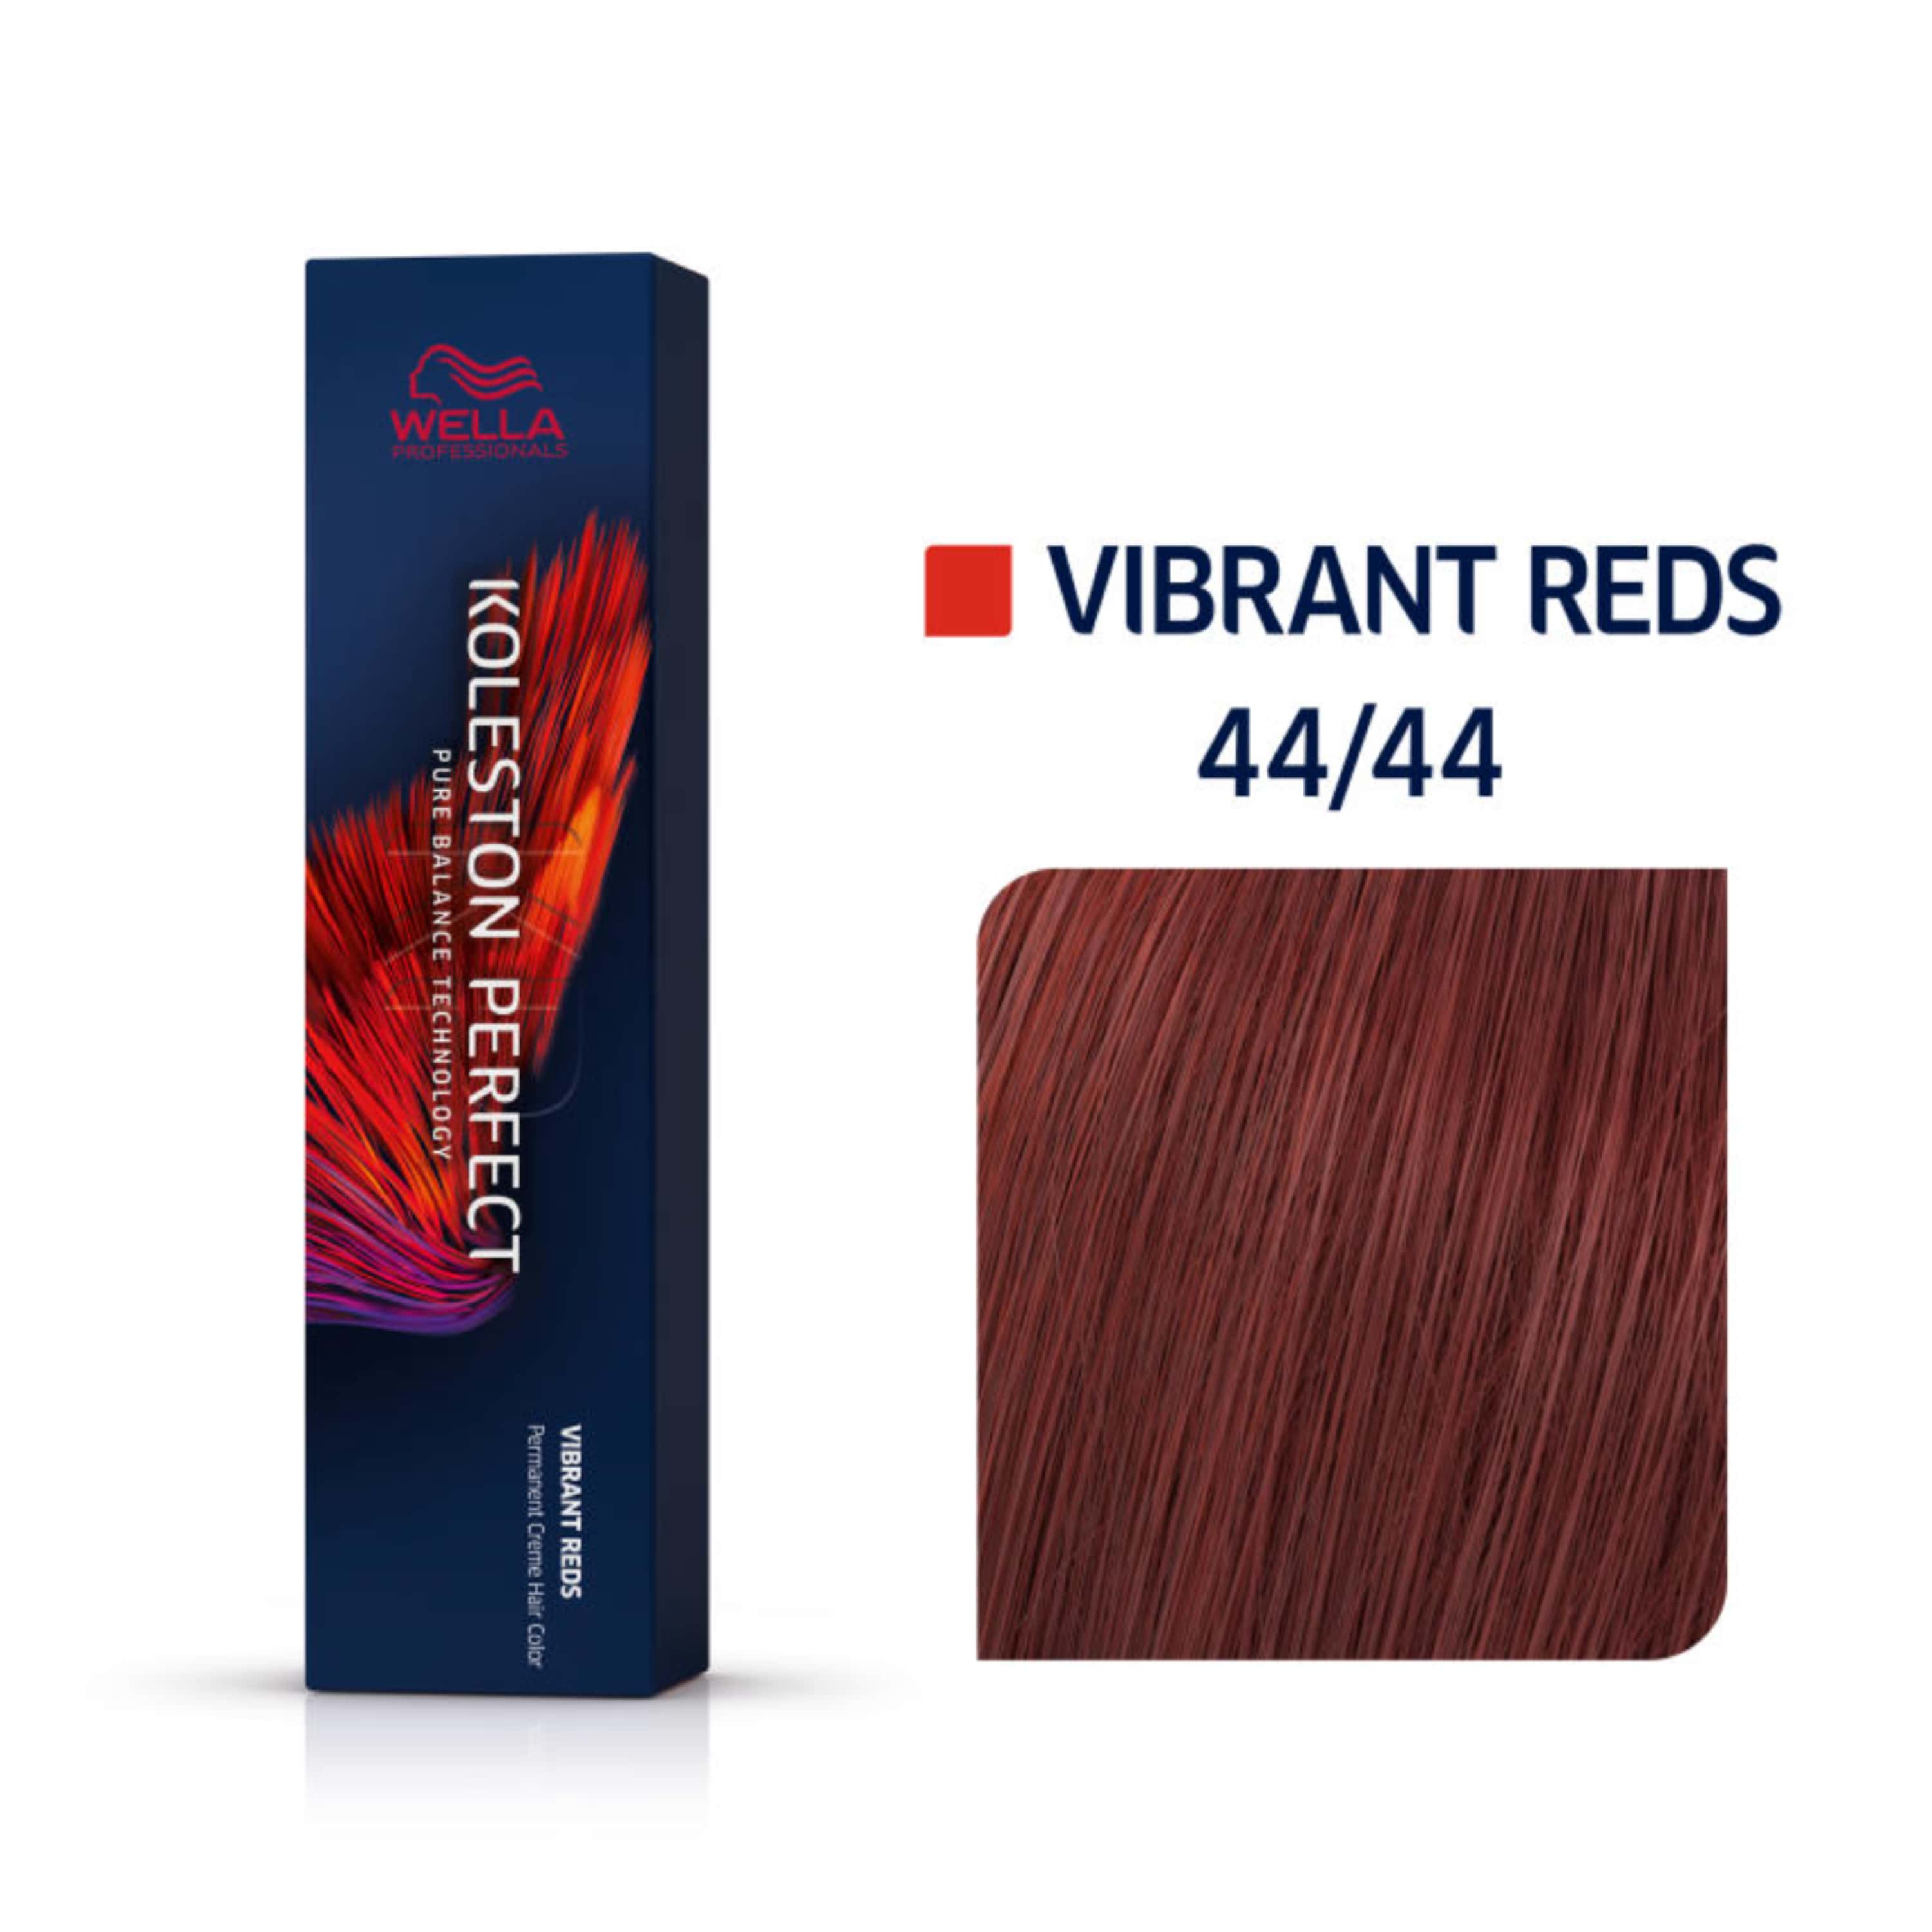 Wella Koleston Vibrant Reds 44/44 Hair Colour (60ml) - beautyhair.co.ukHair Colour